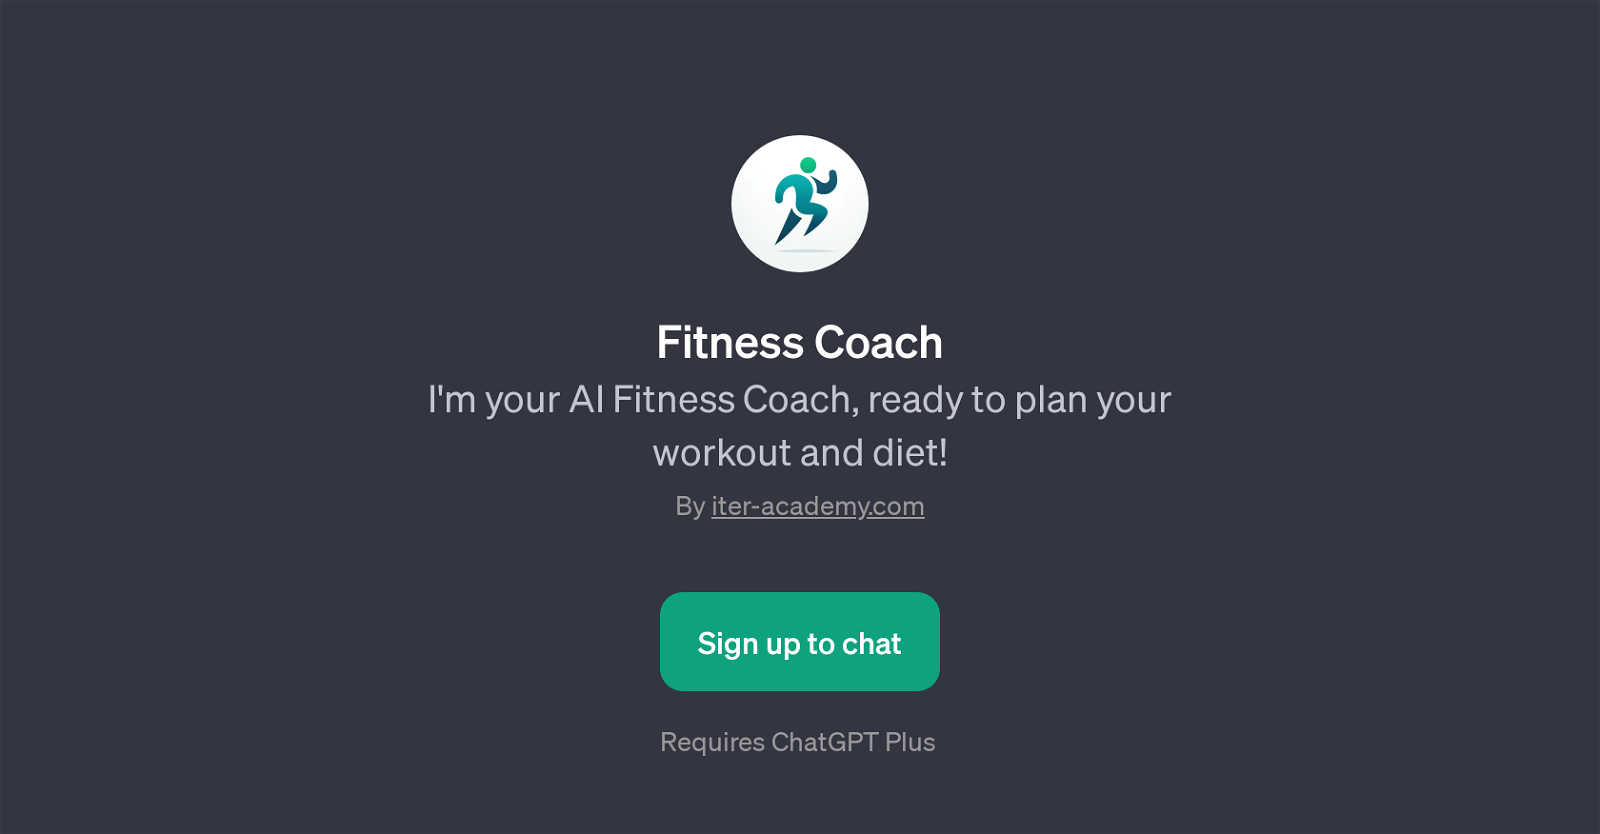 Fitness Coach website